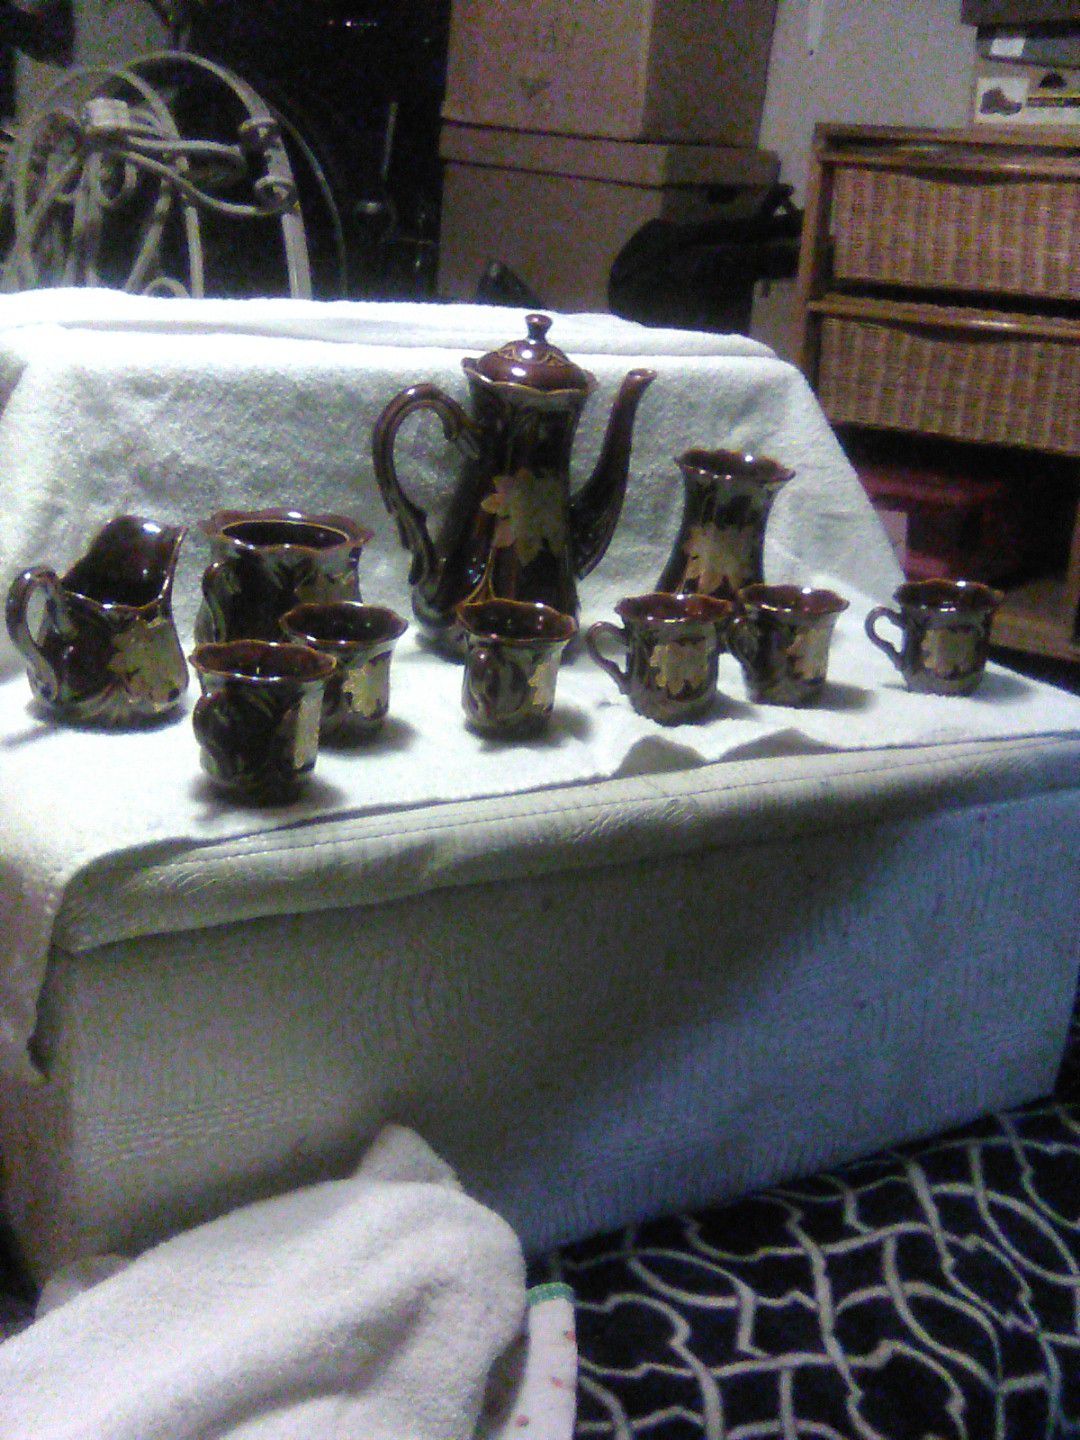 Small tea set